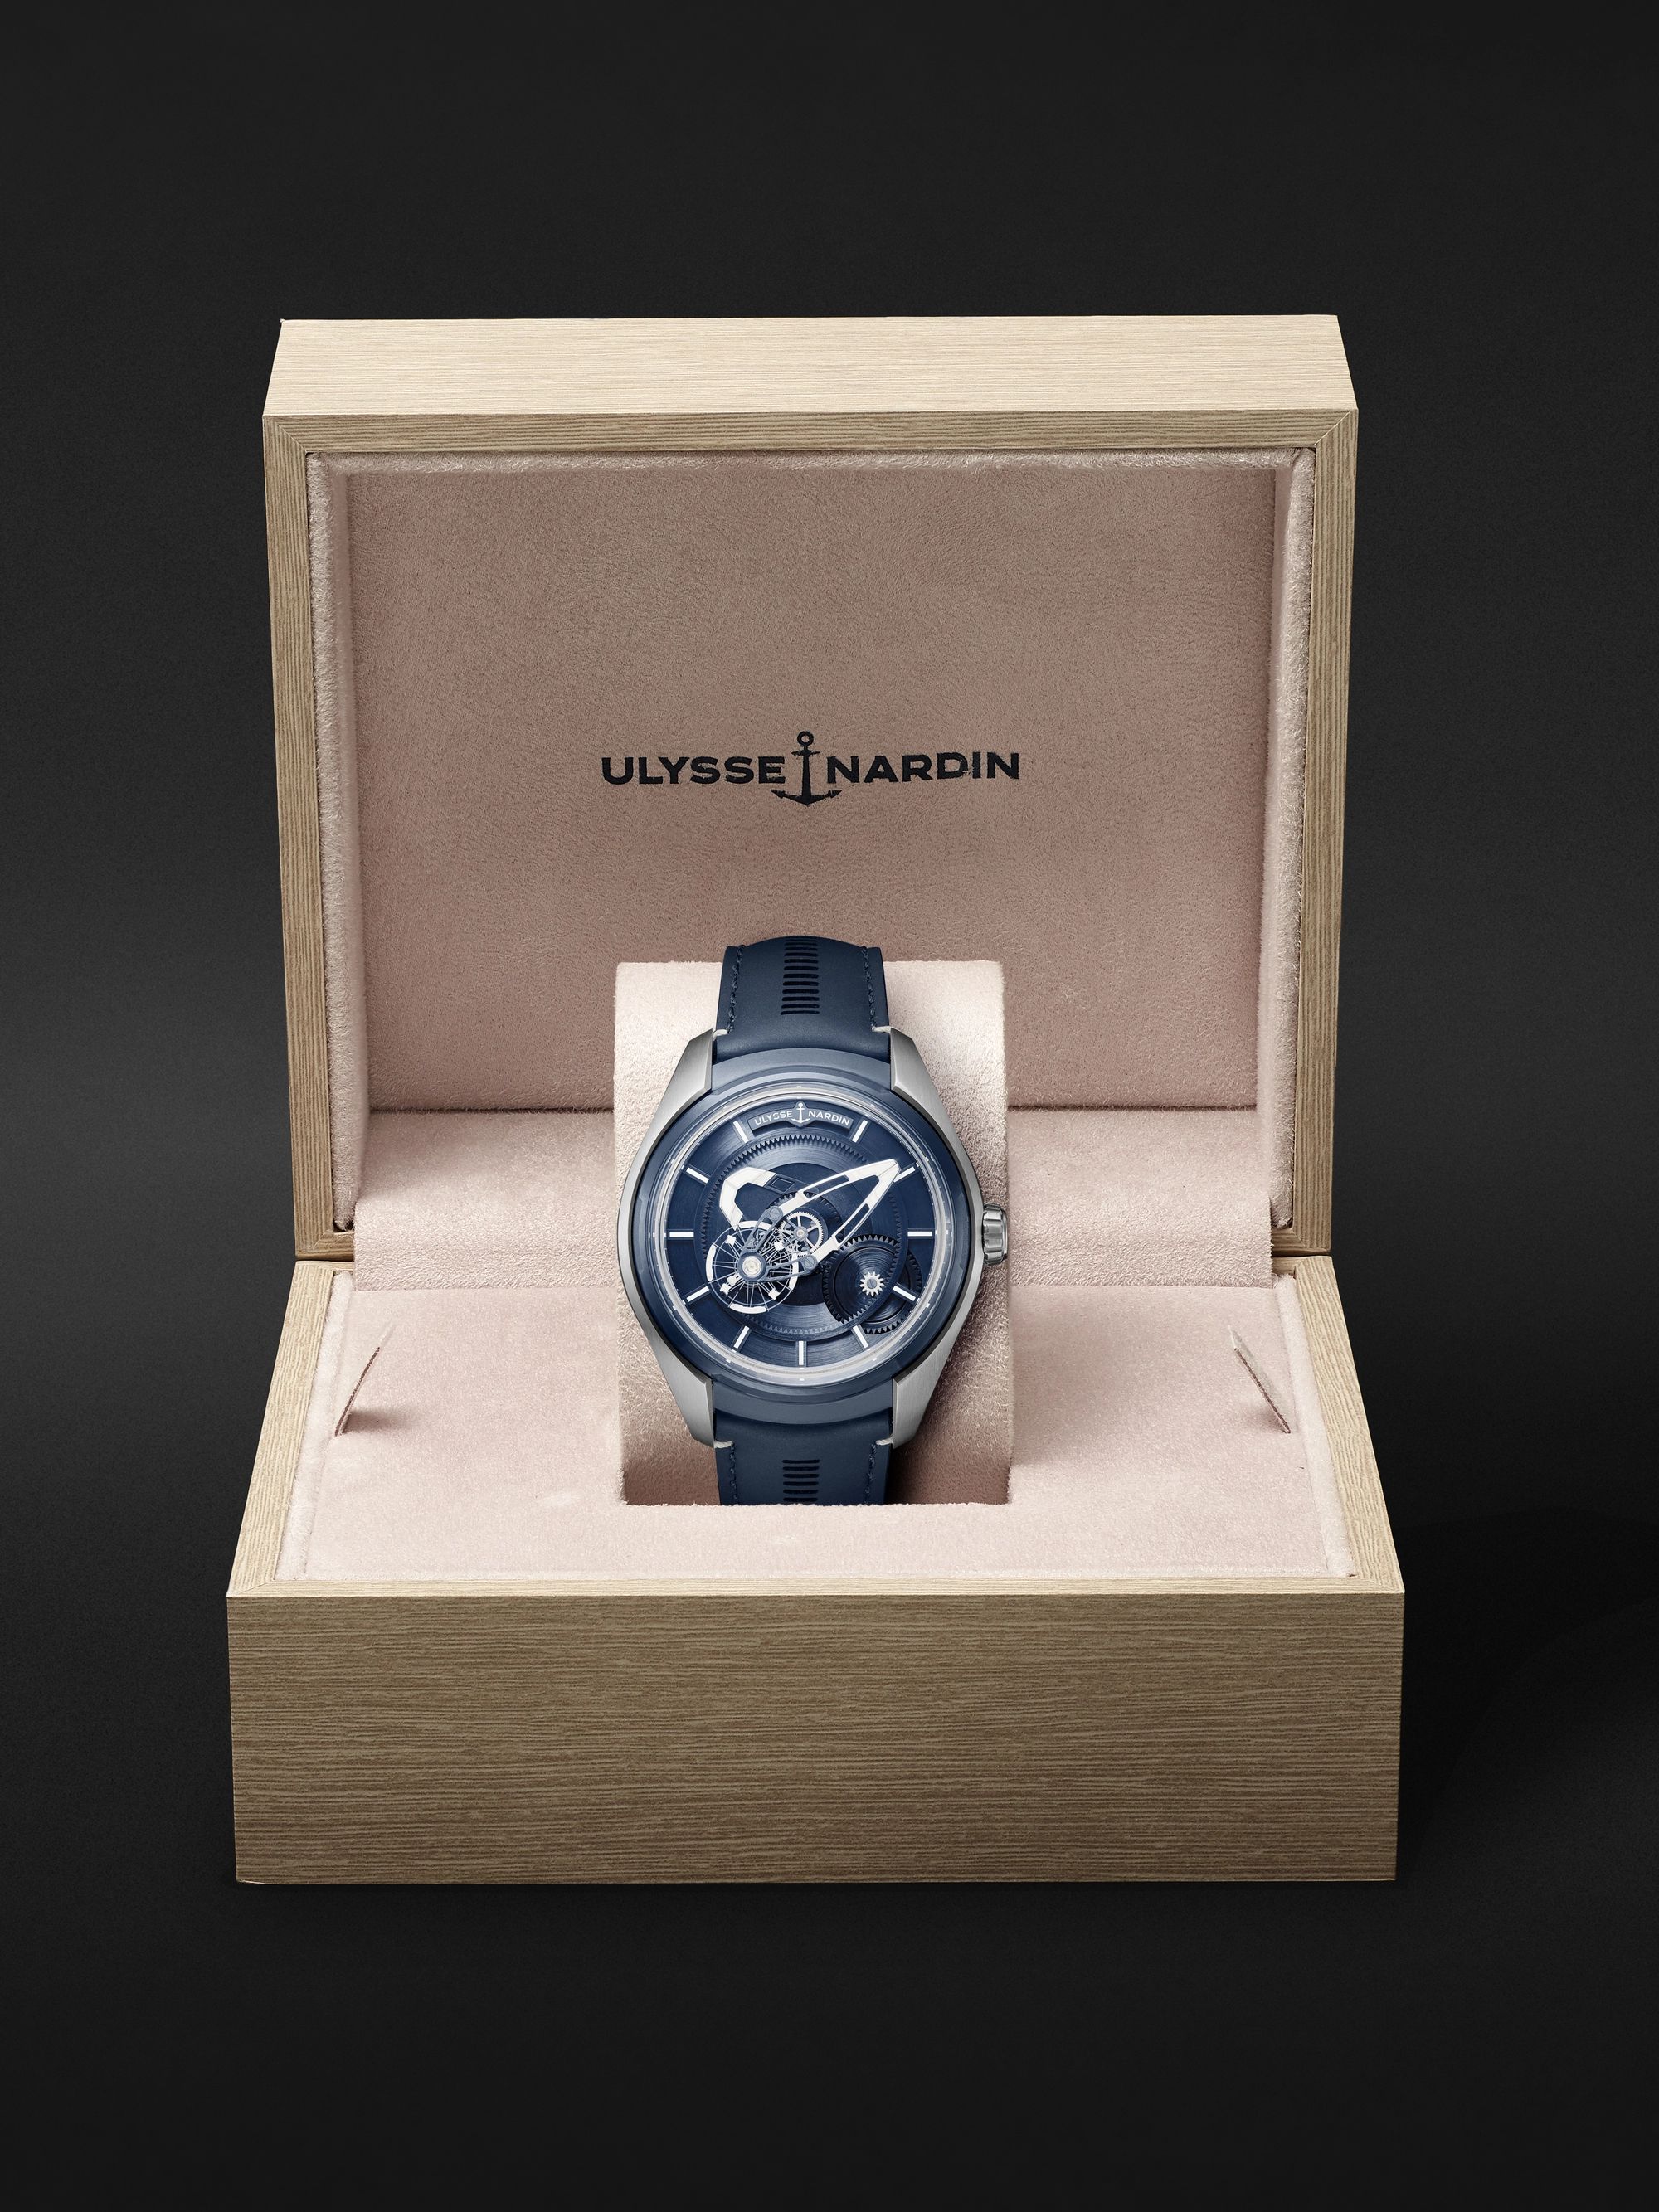 ULYSSE NARDIN Freak X Automatic 43mm Titanium and Leather Watch, Ref. No. 2303-270.1/03